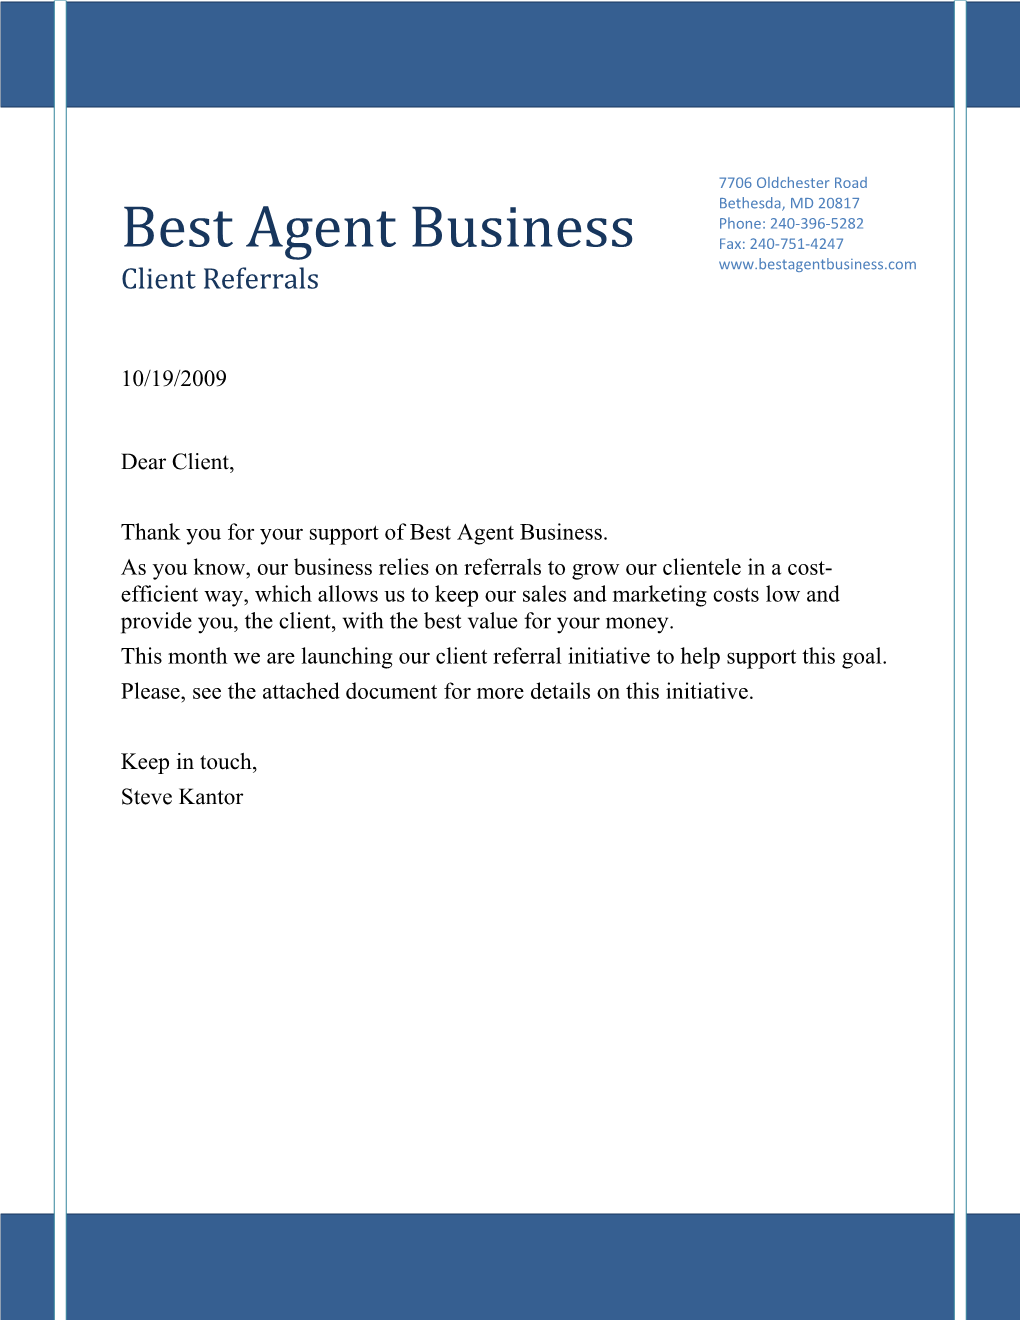 Best Agent Business